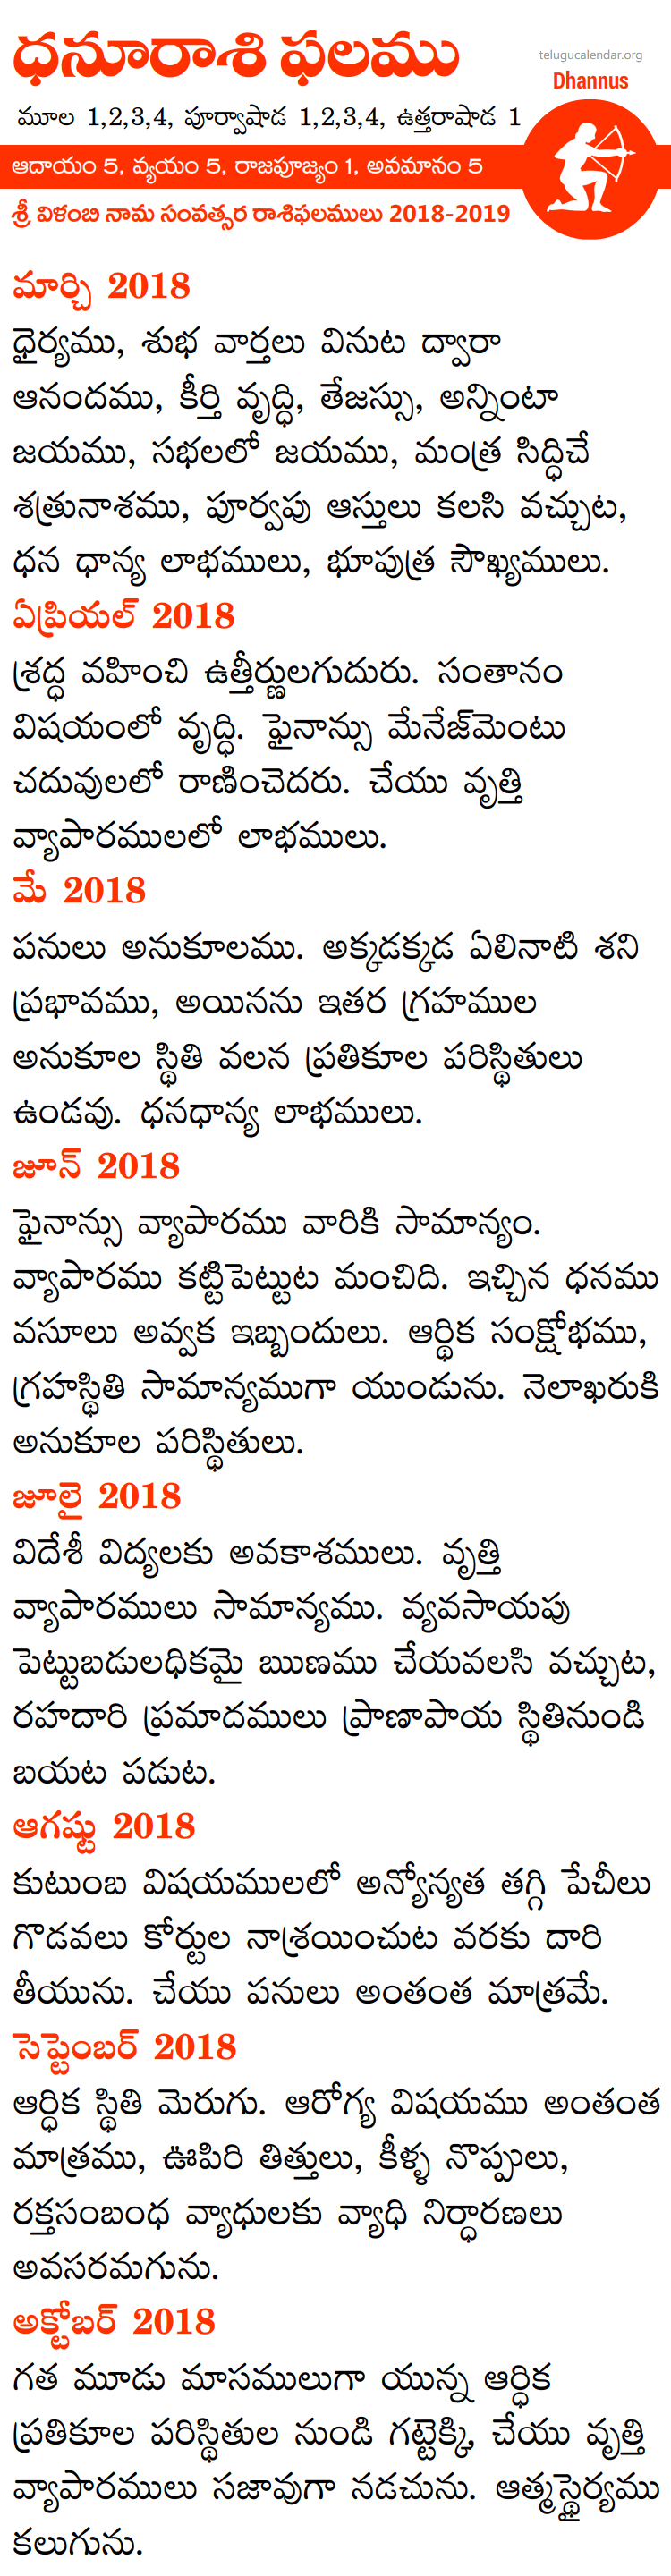 Dhannus Rasi Phalalu 2019-2020 Telugu